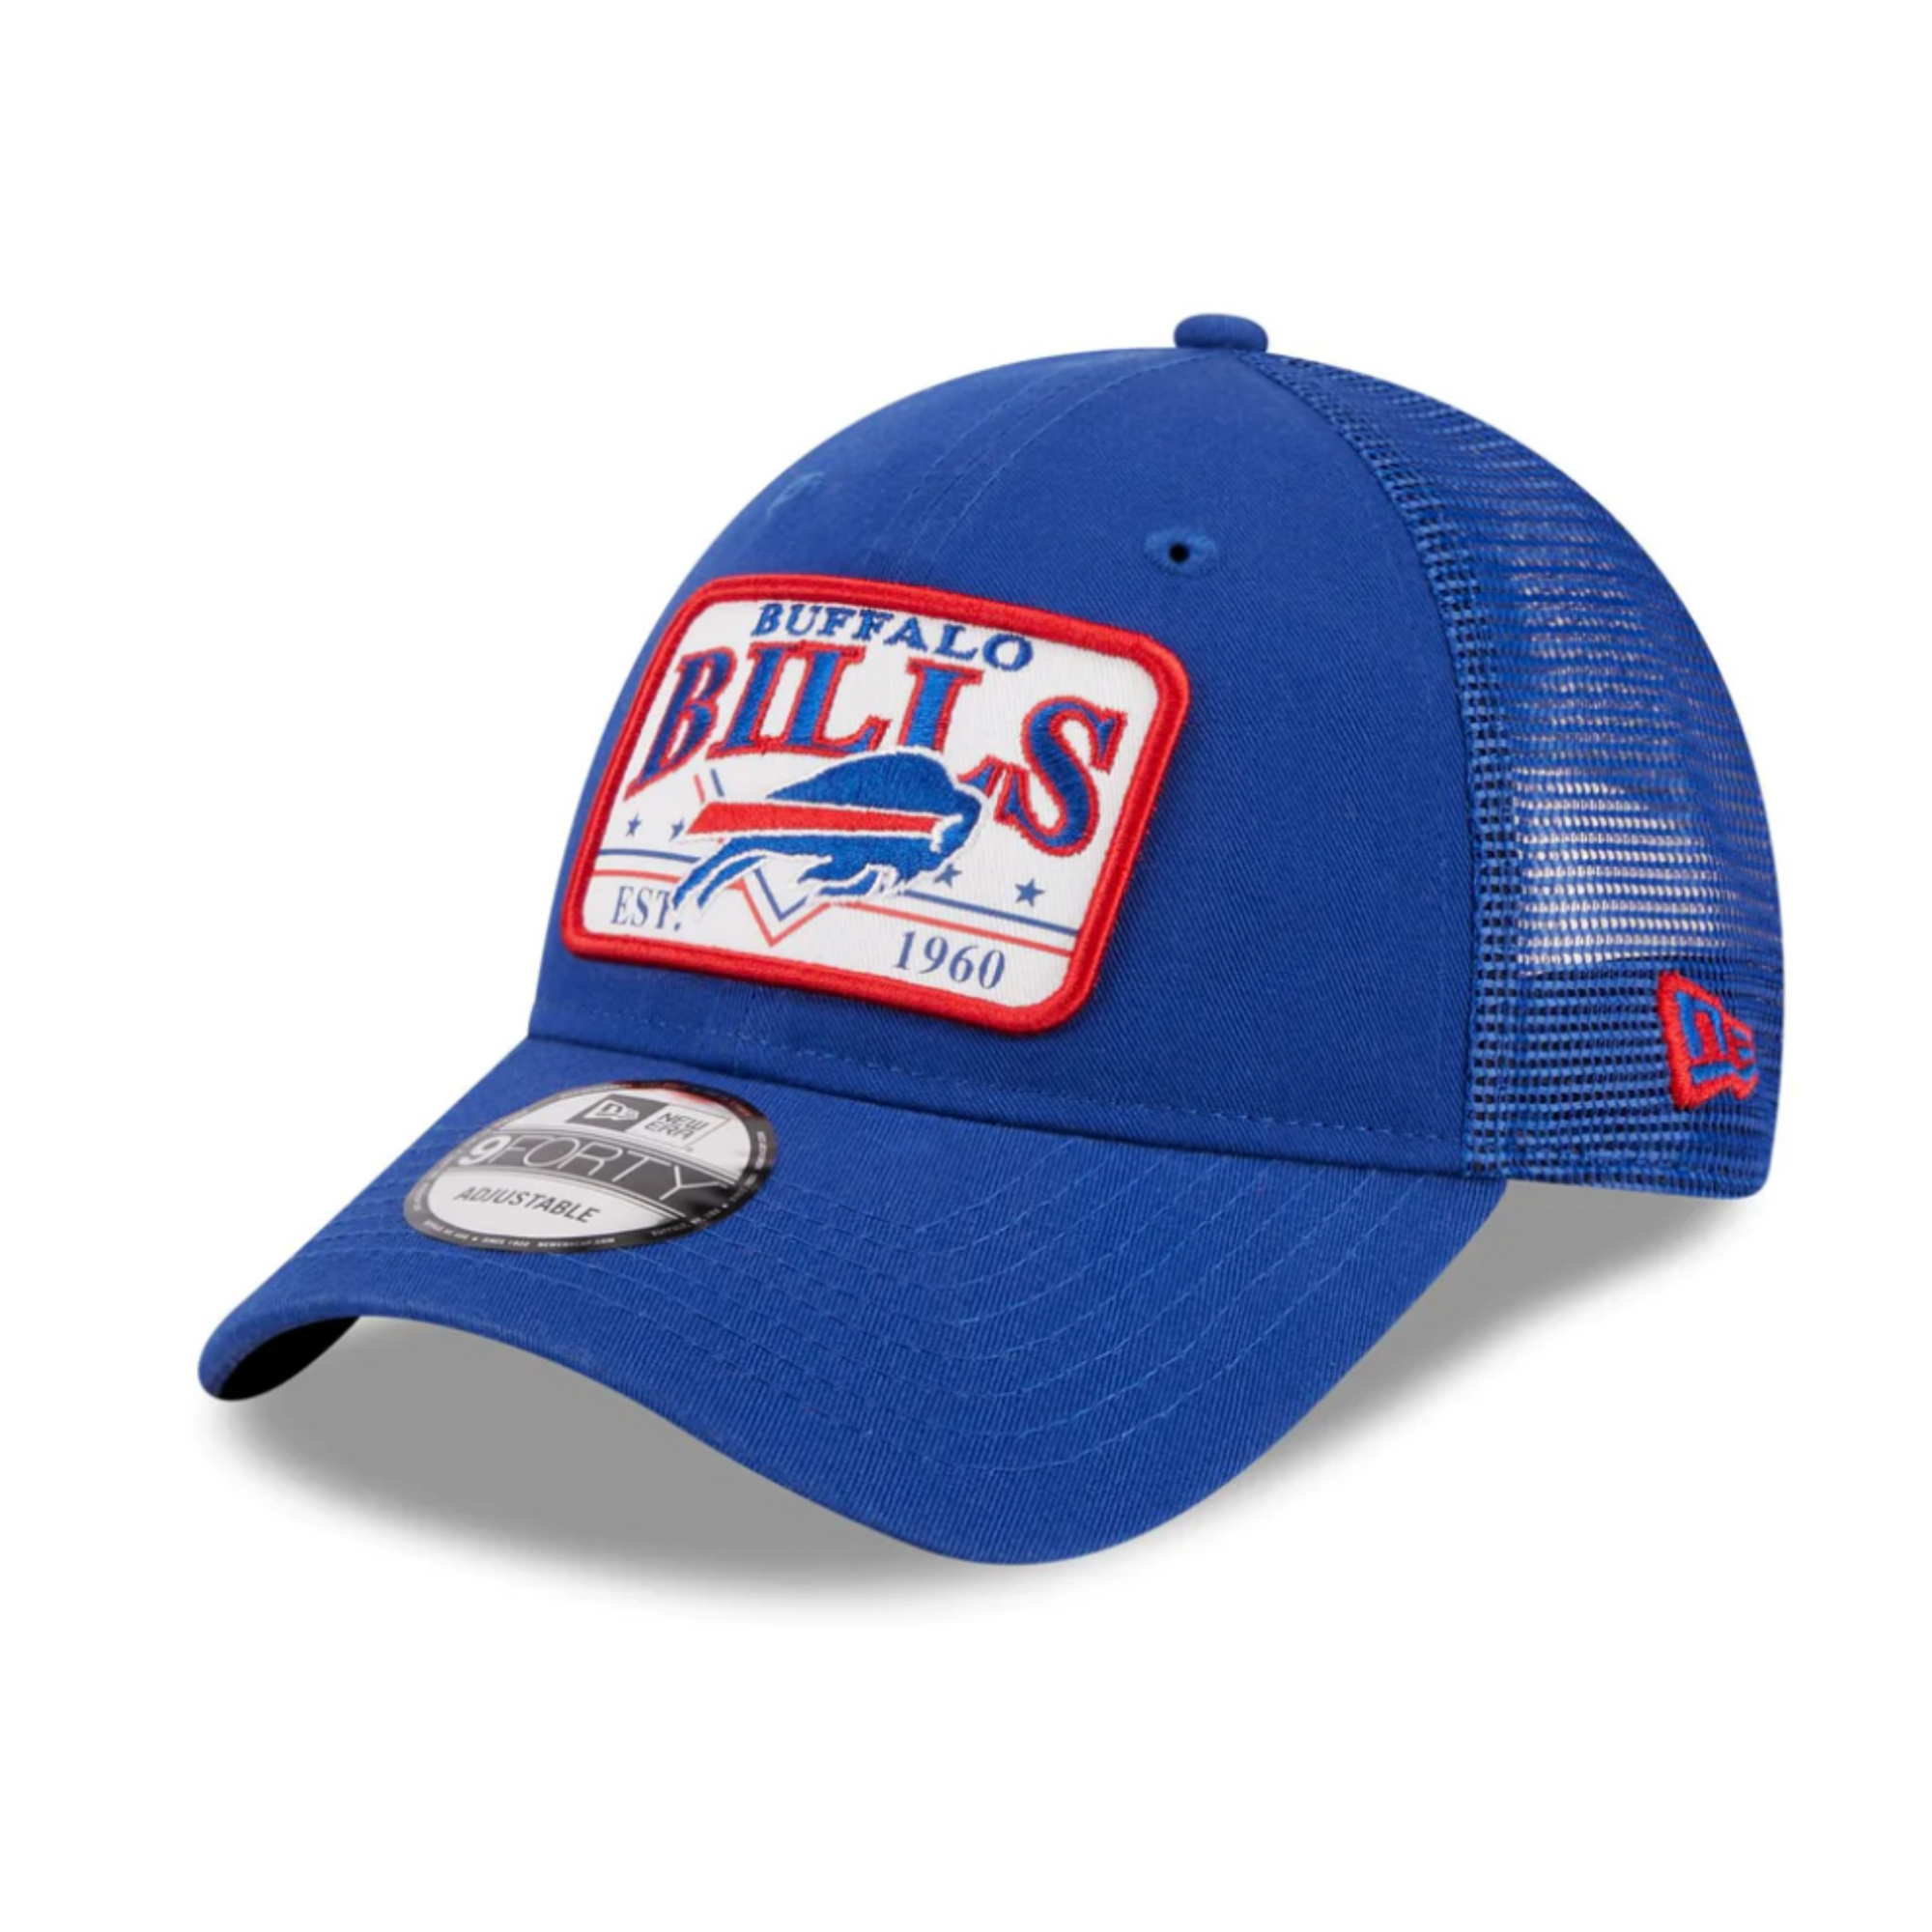 New Era Buffalo Bills Hats | The BFLO Store